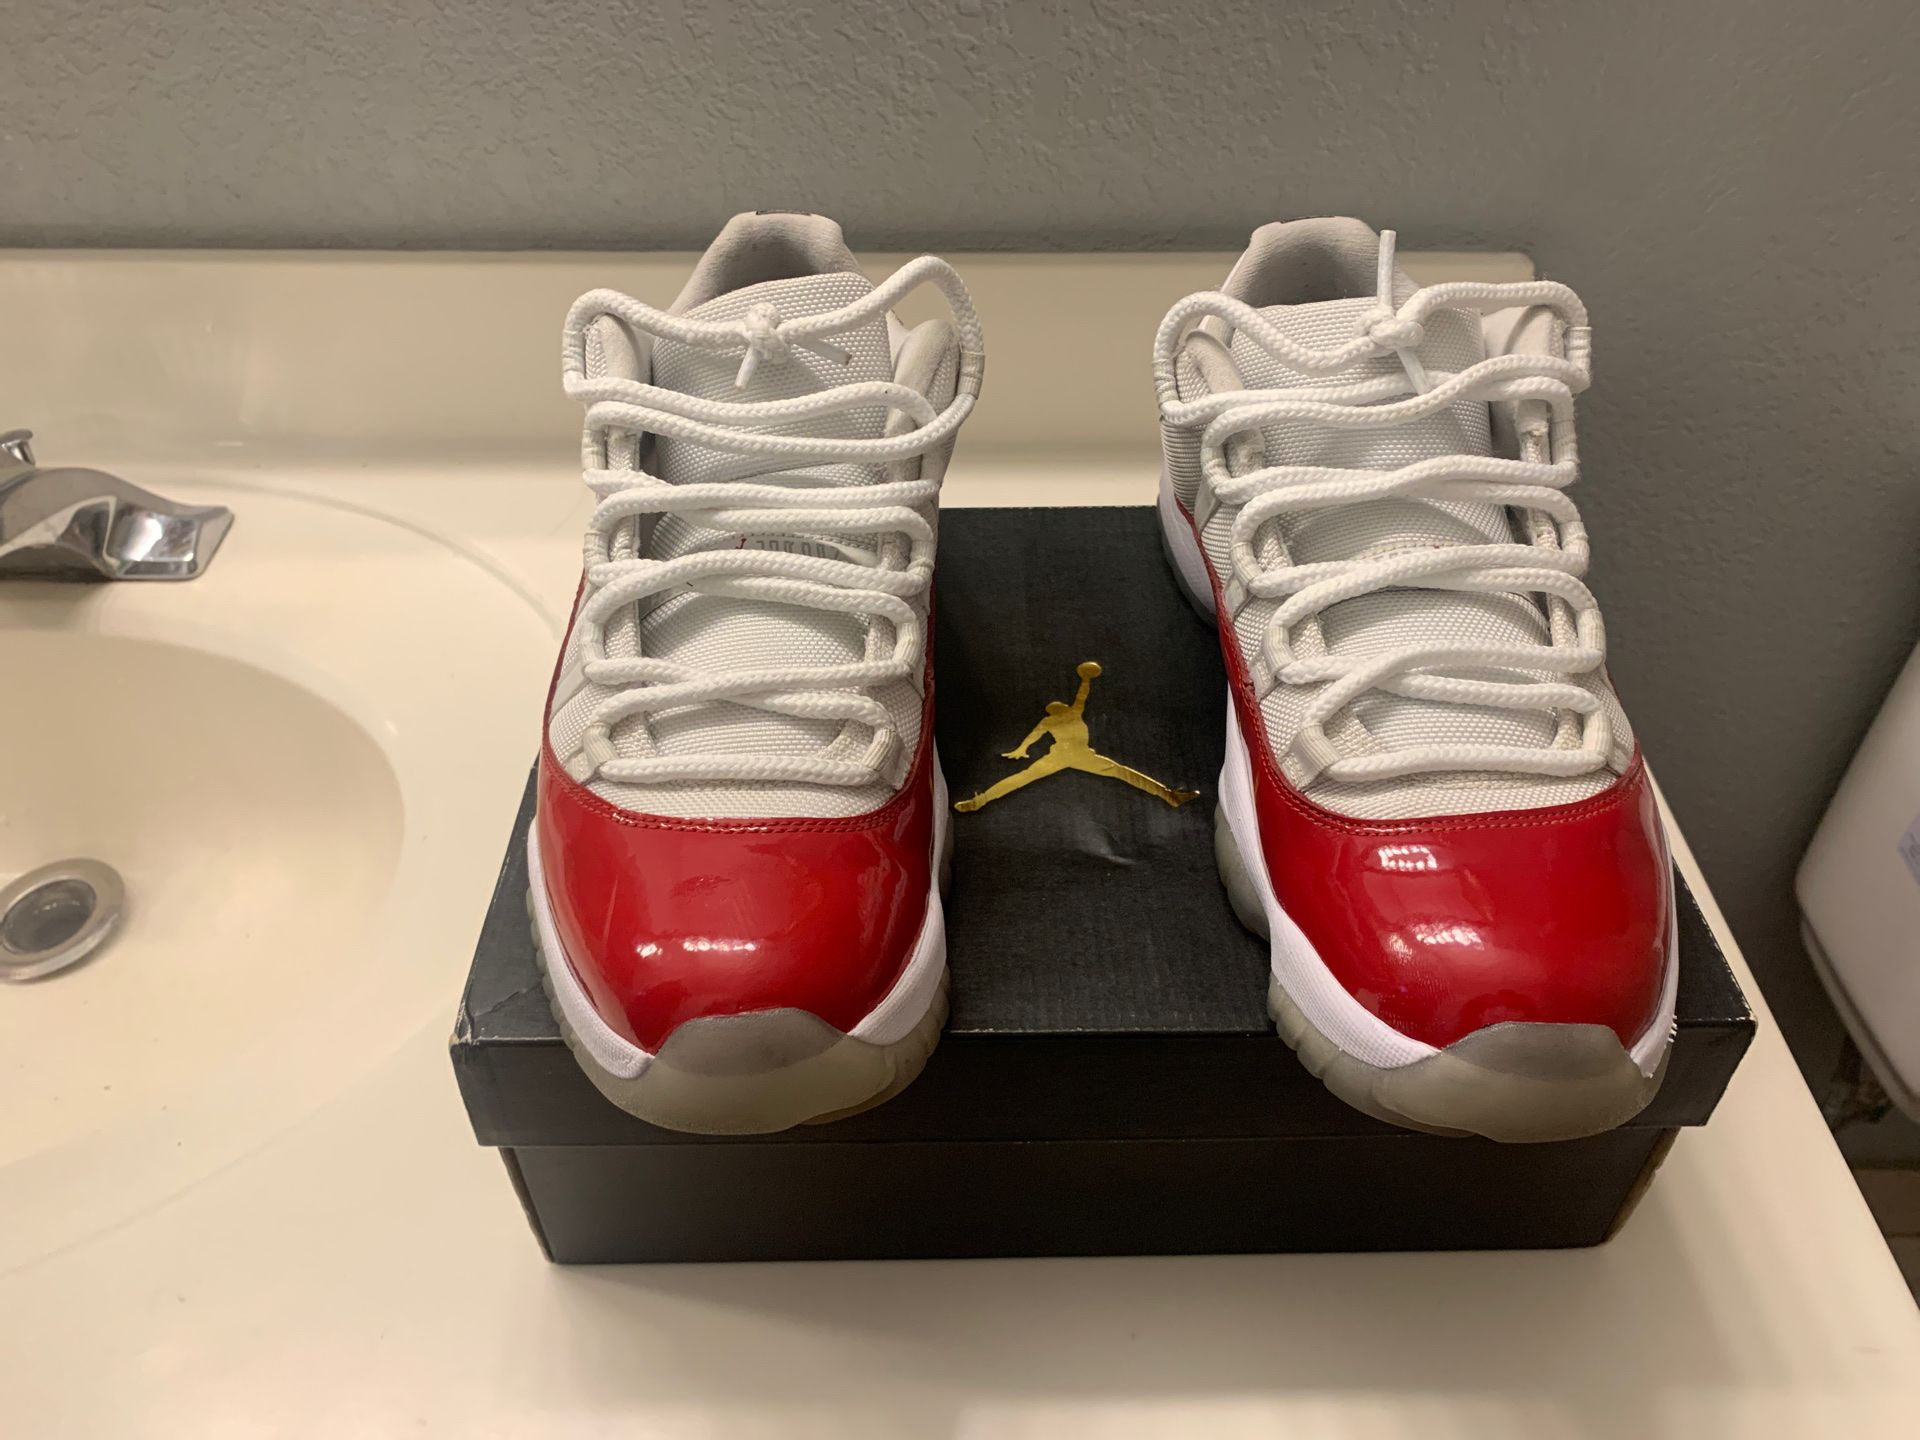 Jordan cherry 11 size 9